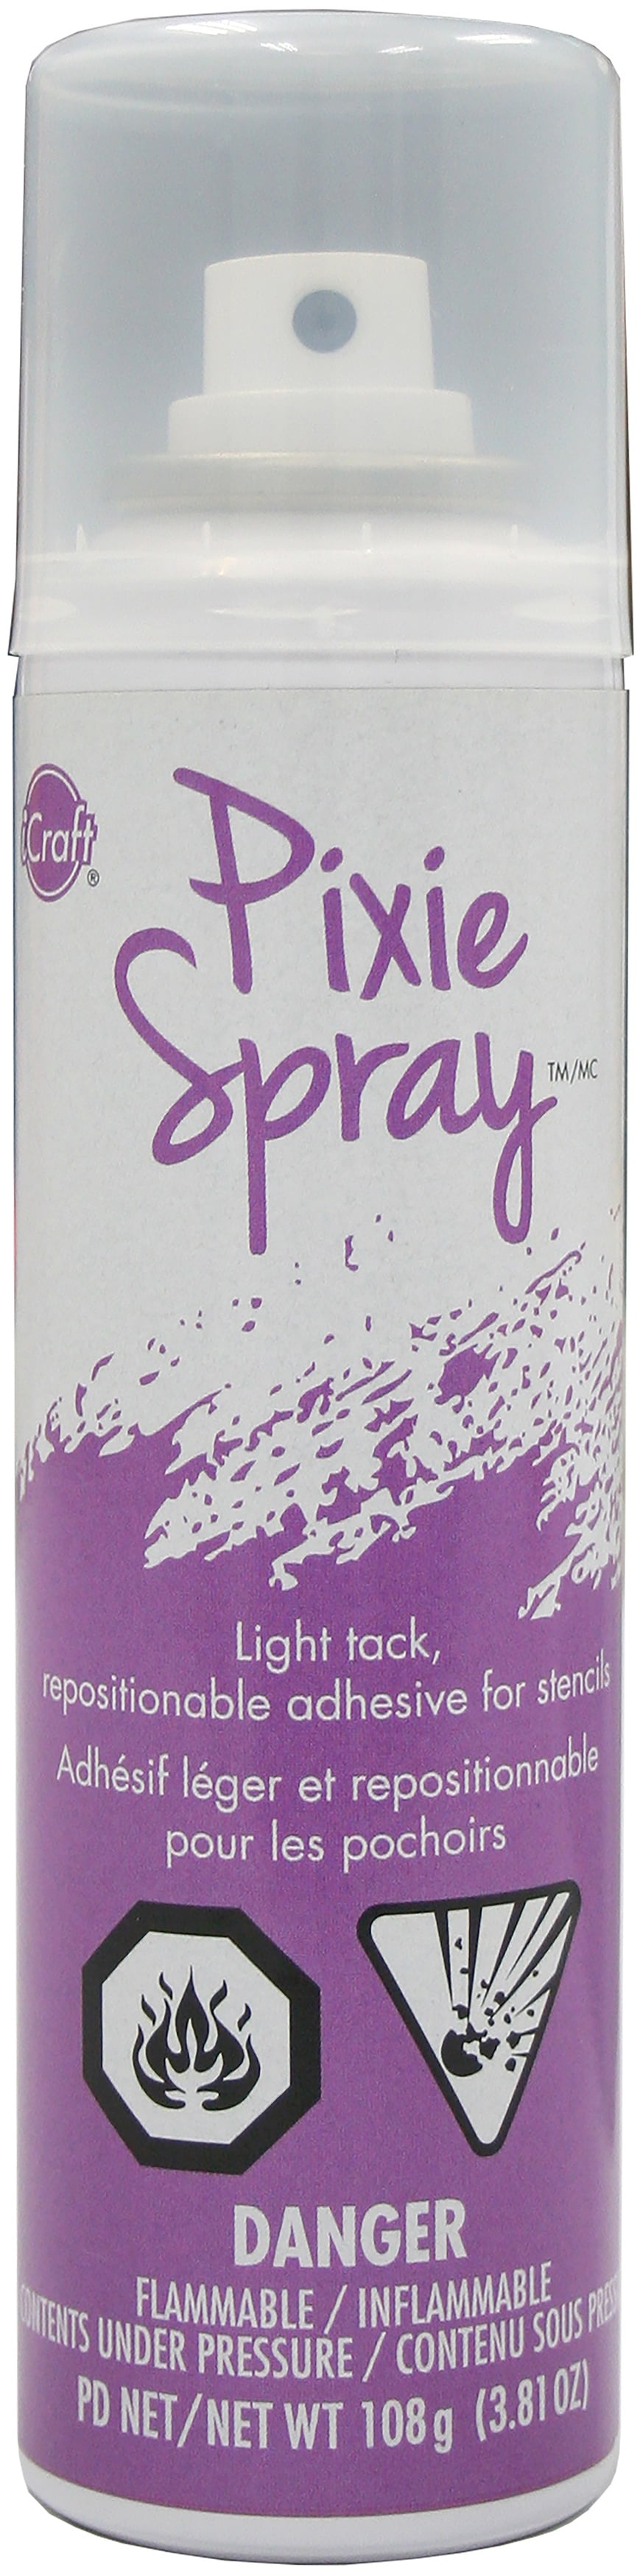 Stencil Spray Adhesive